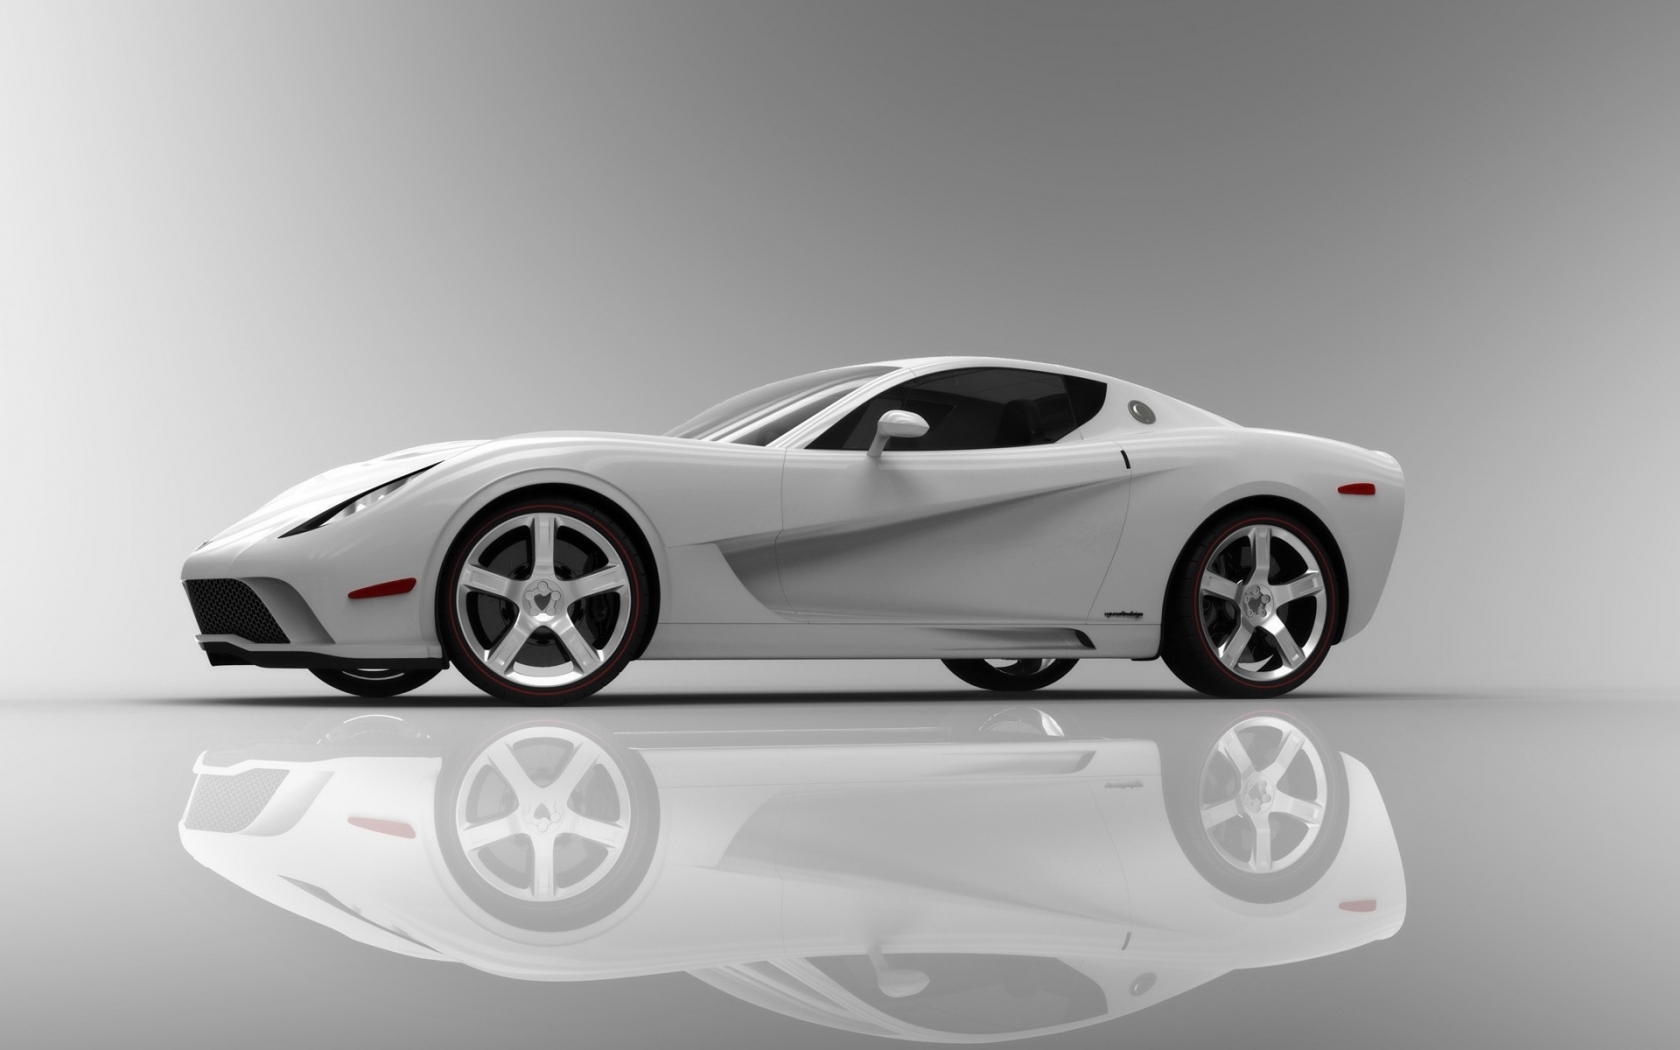 Mallett Corvette Z03 2009 White Front Angle for 1680 x 1050 widescreen resolution